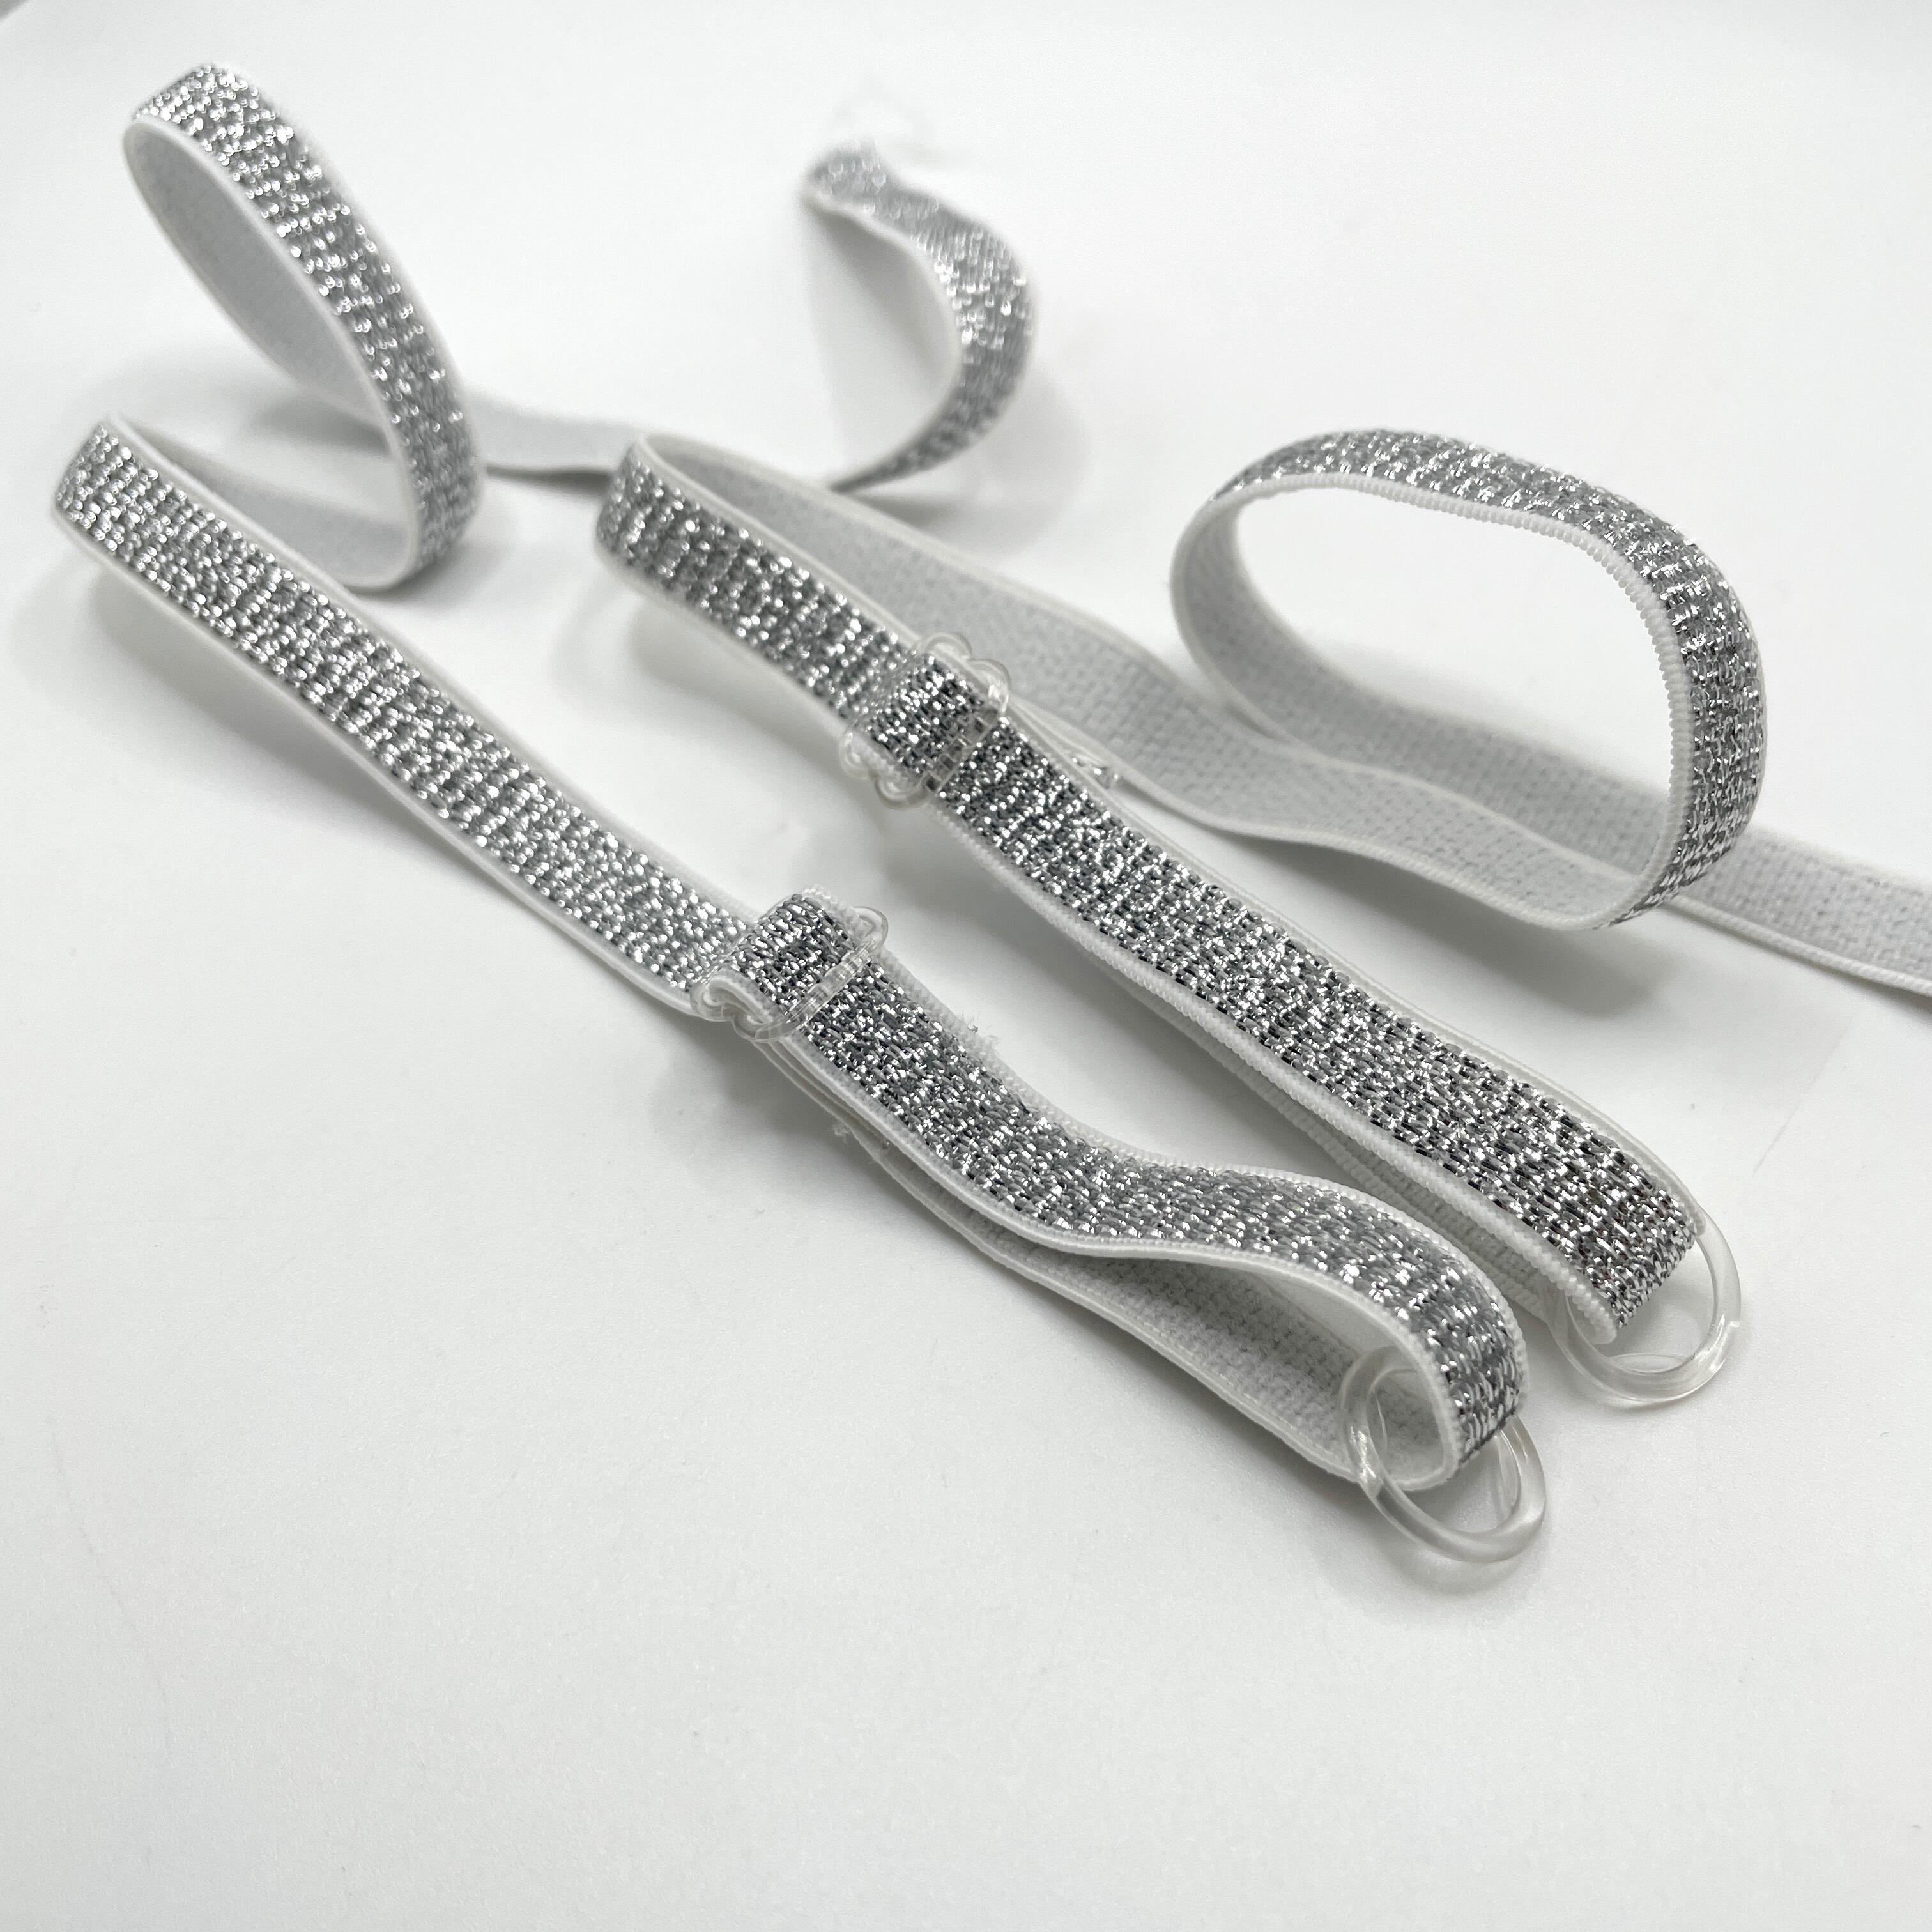 Bra Straps - Sew on - Full Length - 10mm - GLITTERY - Sparkle WHITE/SILVER,  per pair